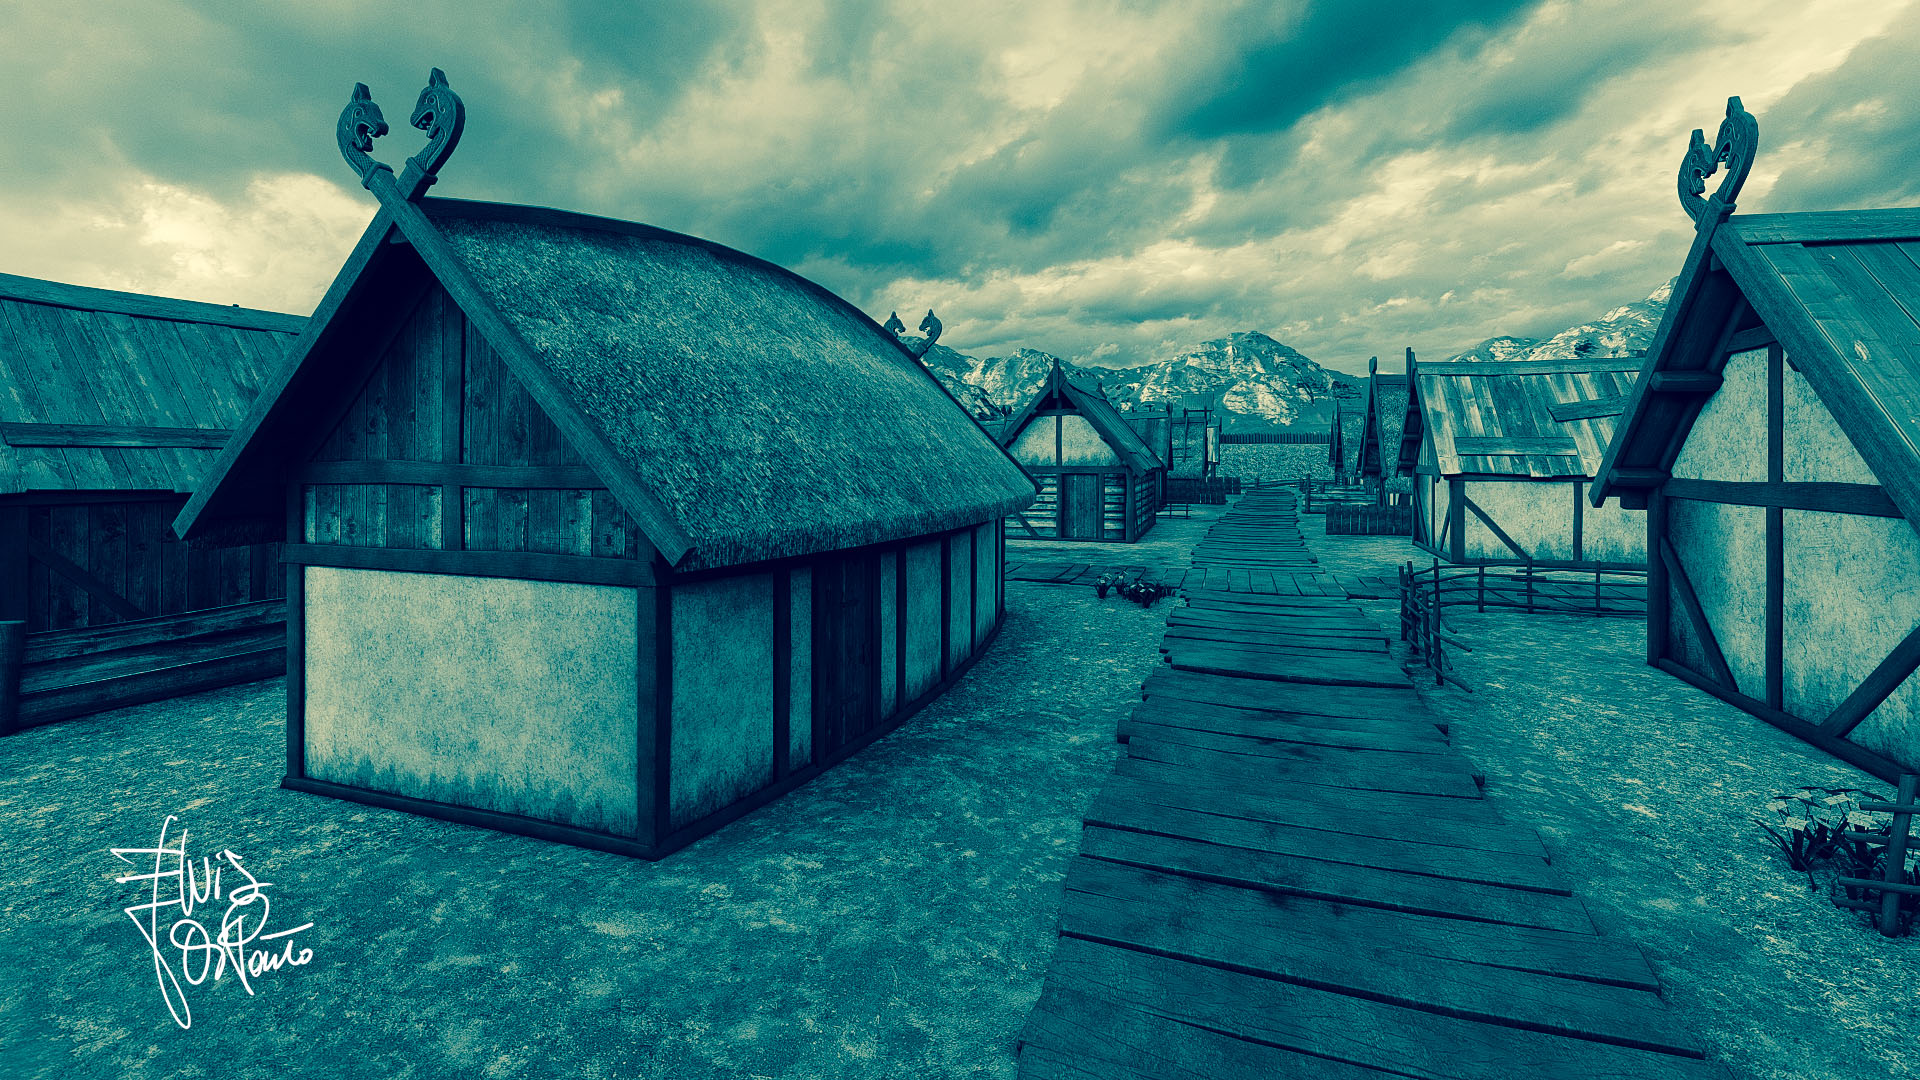 viking village_7 - Photo copia.jpg